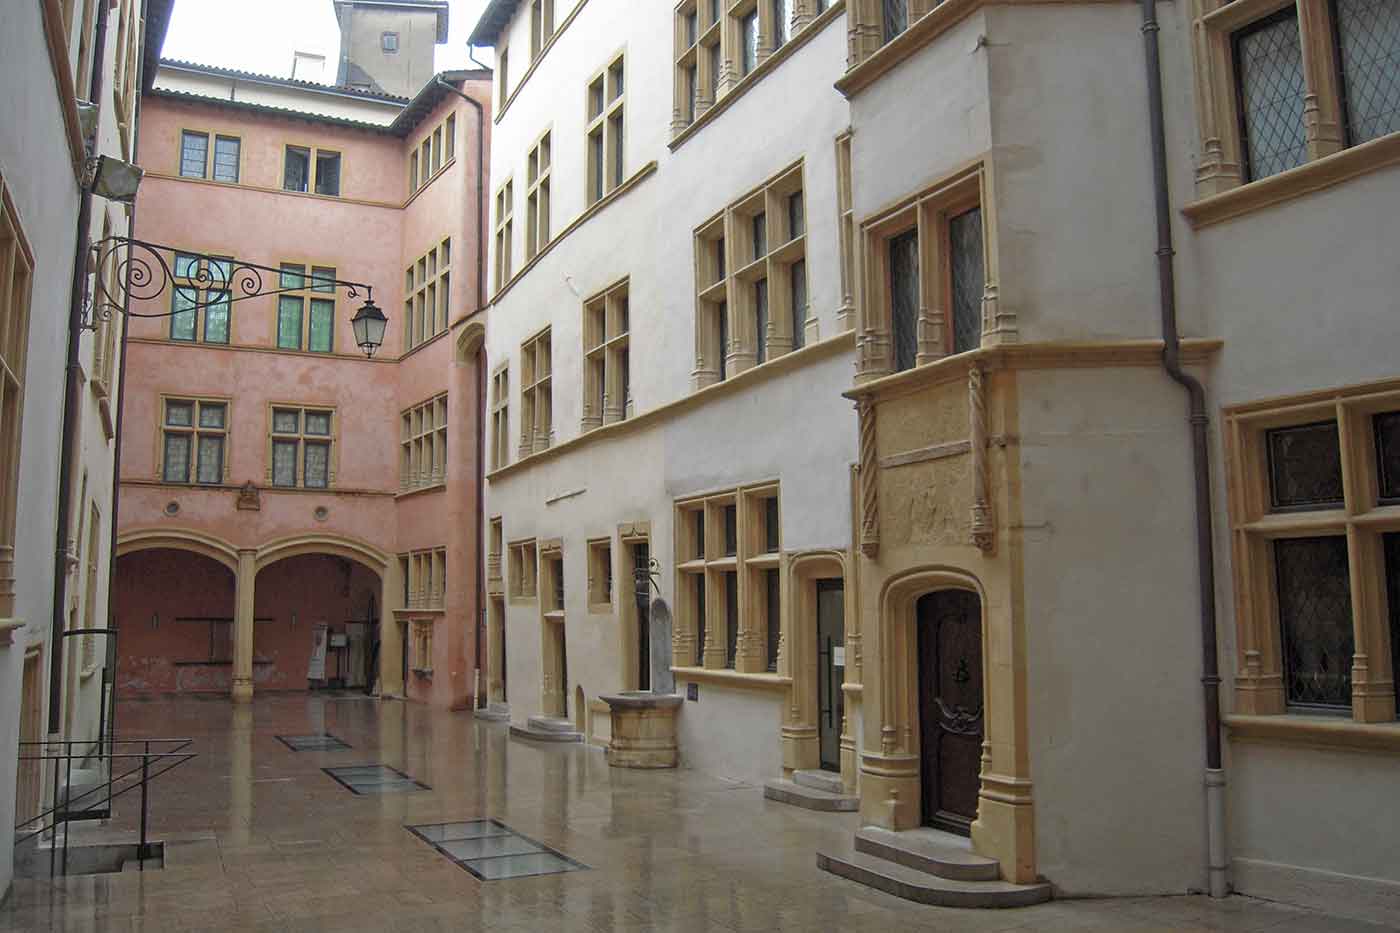 Lyon History Museum